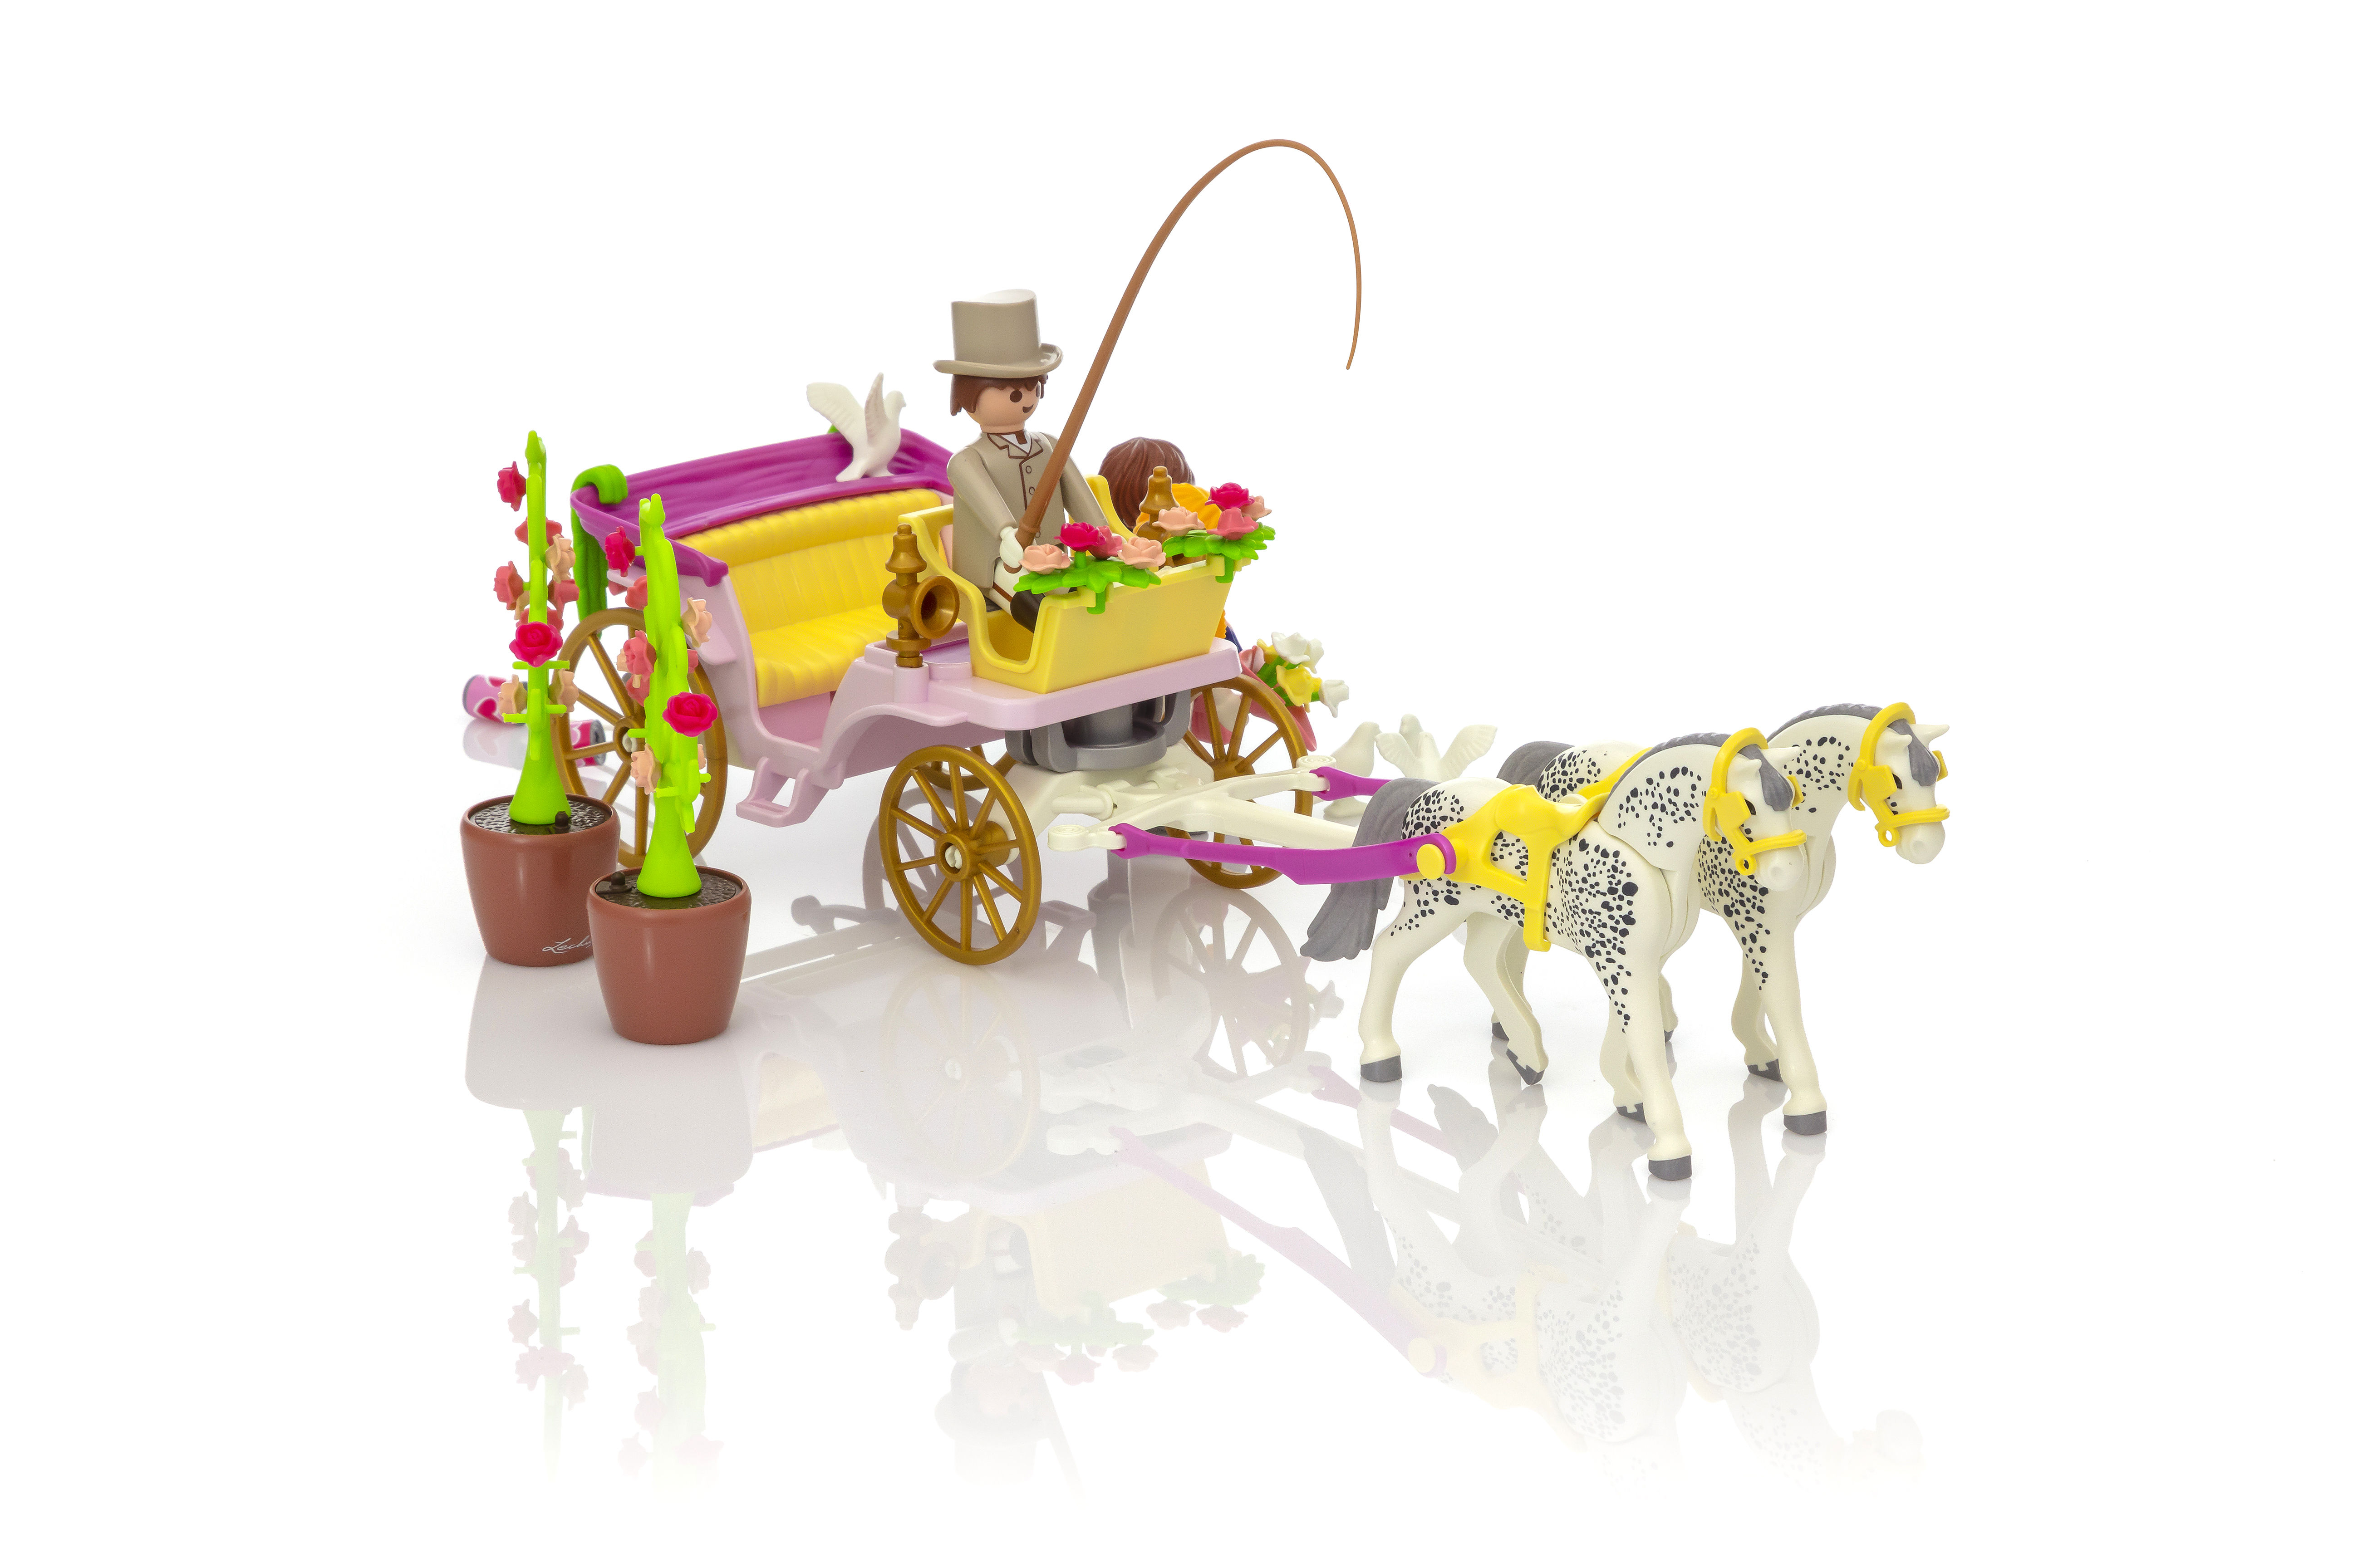 Playmobil 9427 City Life Wedding Carriage with Tin Can Trail, Fun